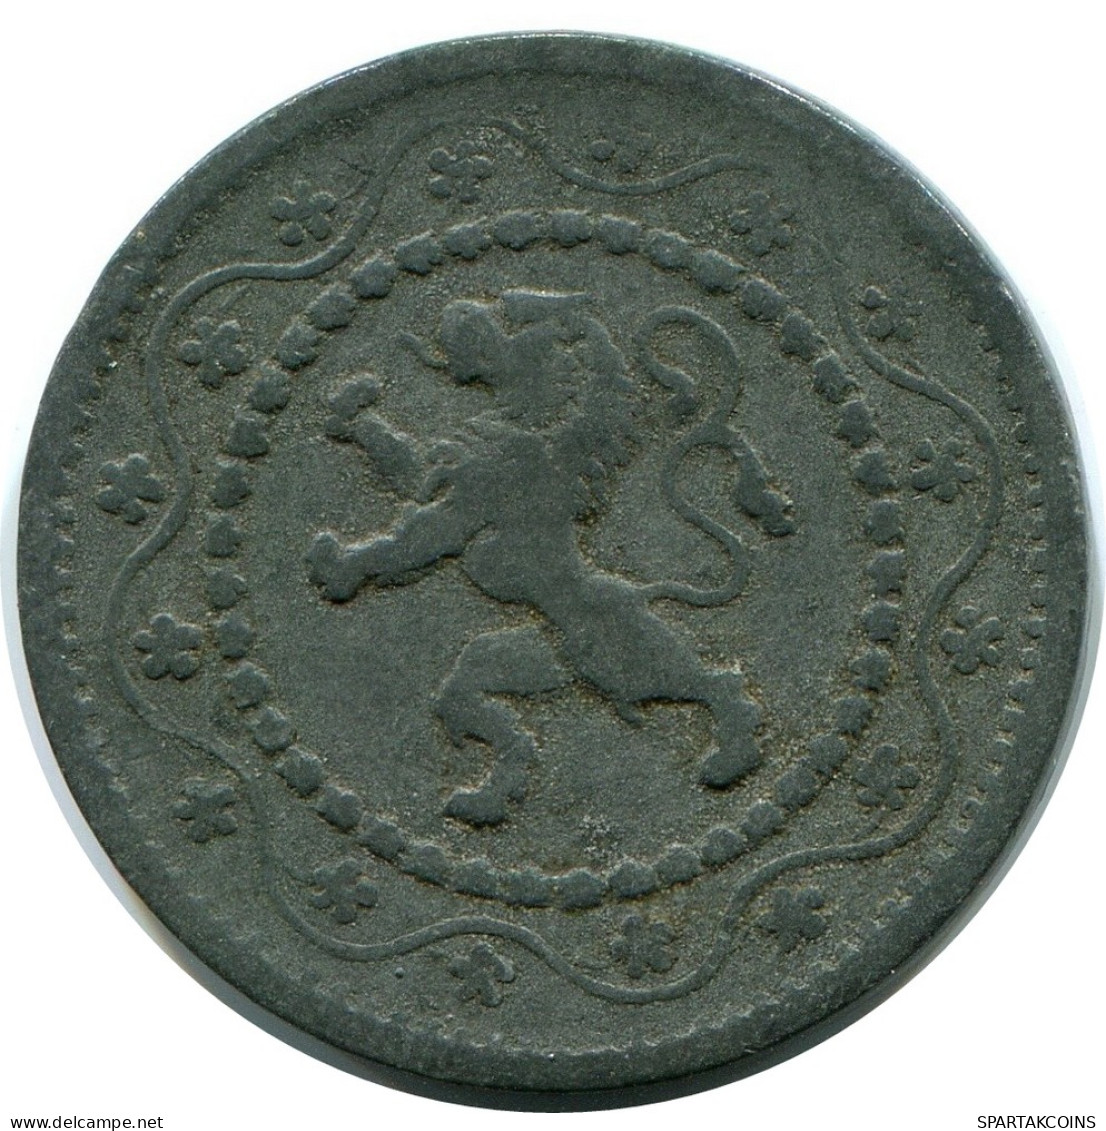 10 CENTIMES 1915 DUTCH Text BELGIUM Coin #BA412.U - 10 Cents